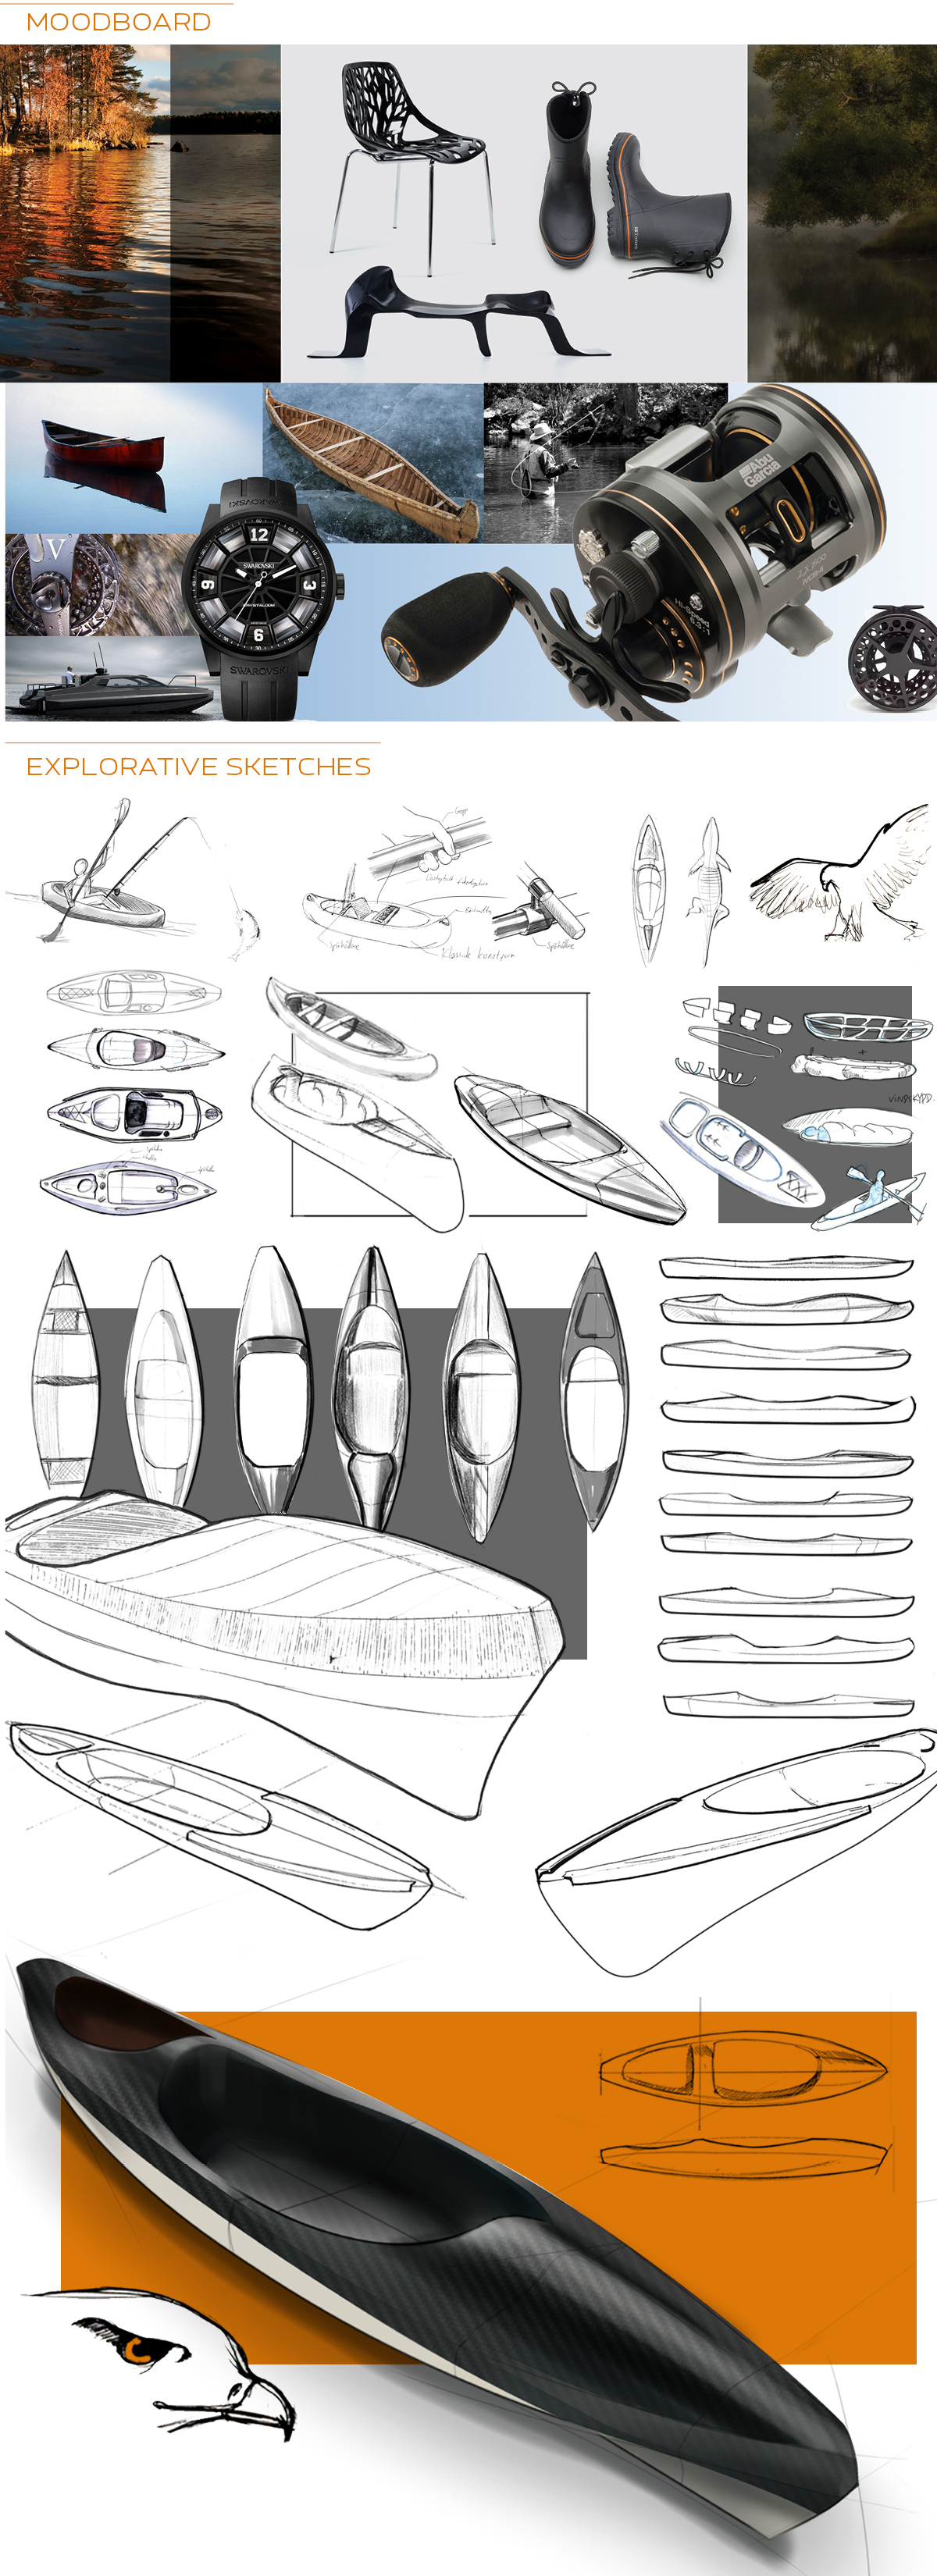 kayak Composite Carbon Fiber Physical Model fishing Midninght Composite Fiskgjusen